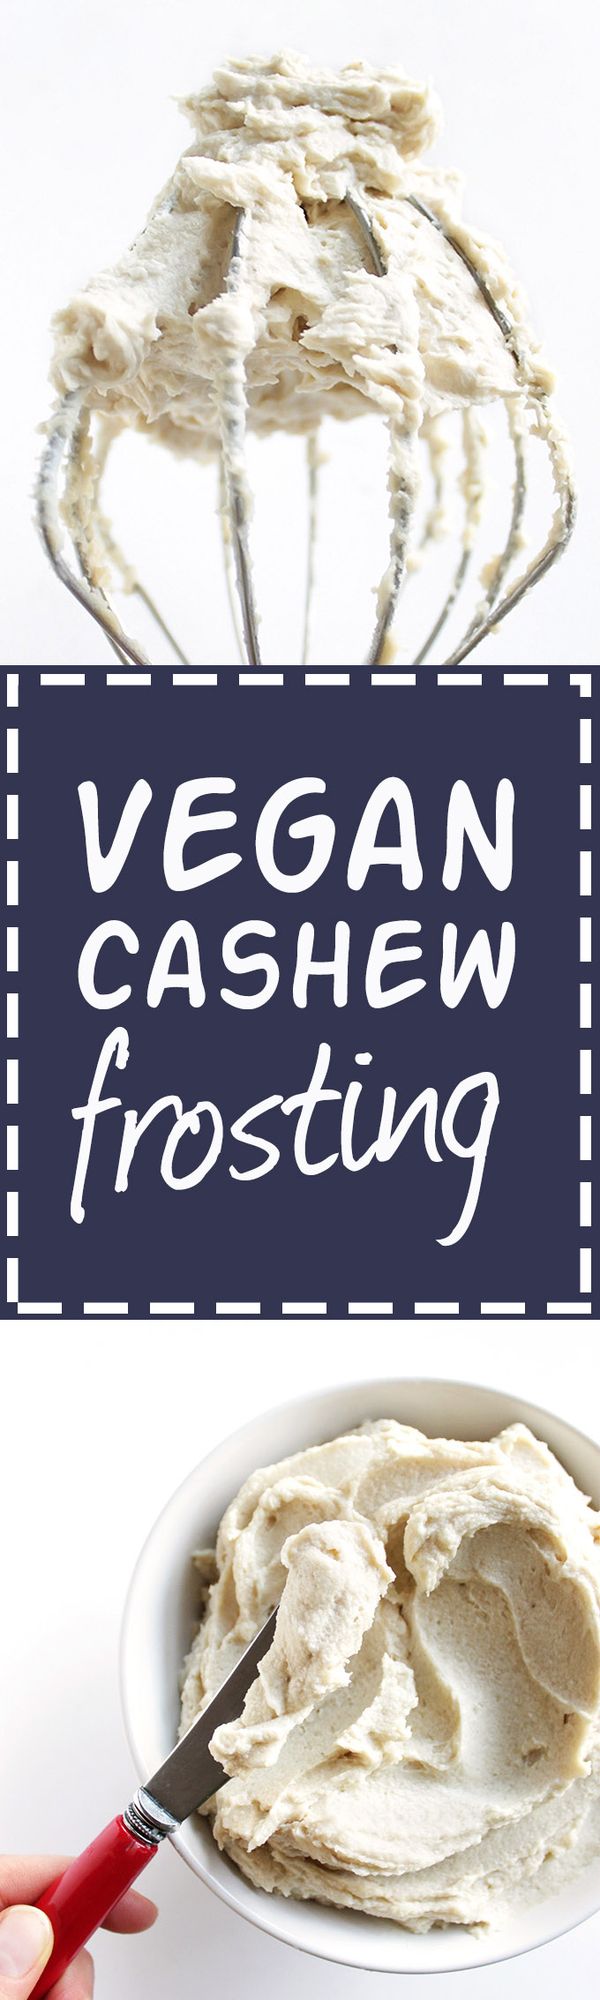 Vegan Cashew Frosting